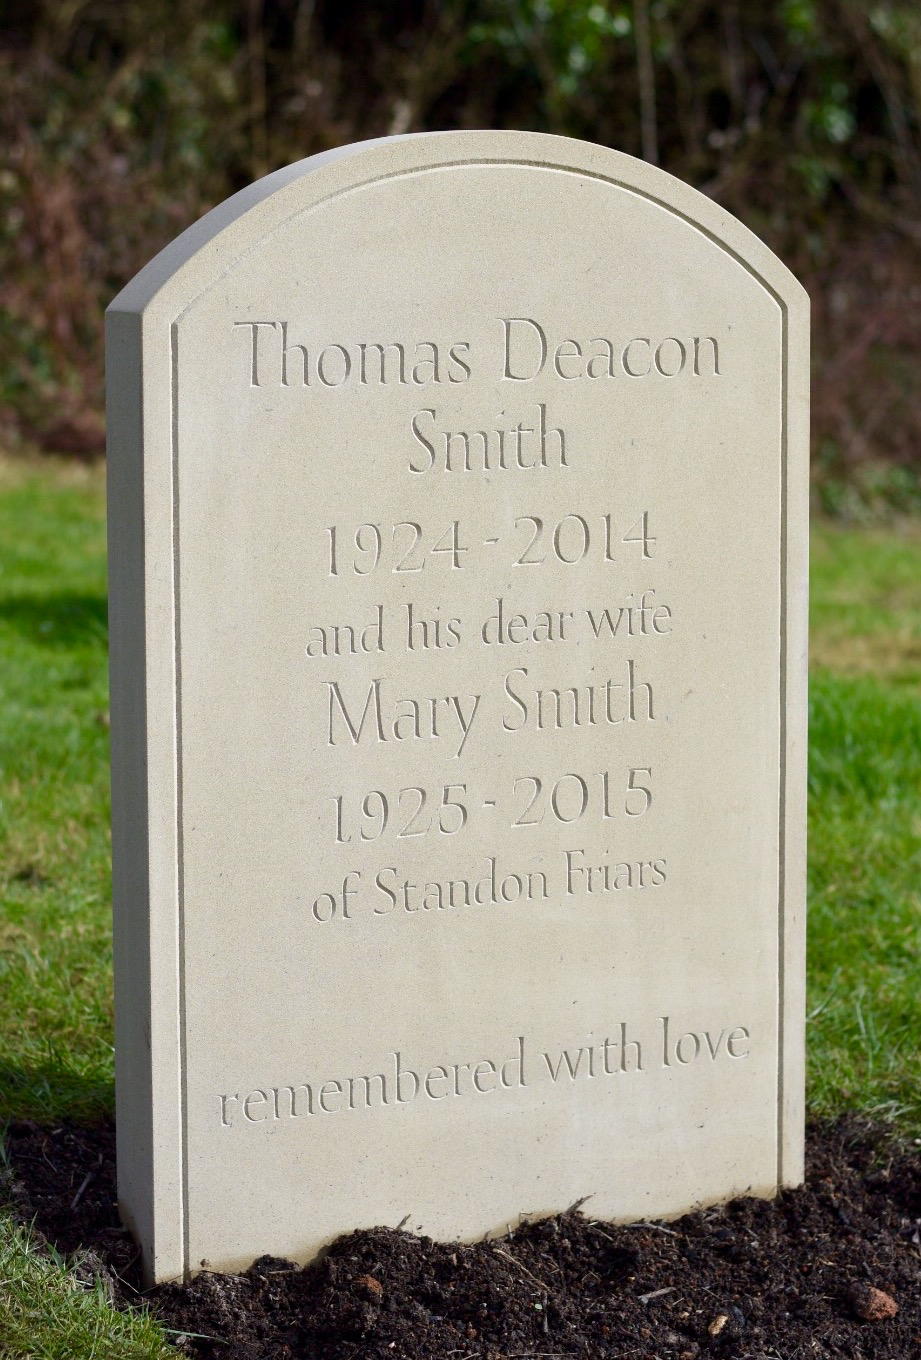 Headstone on Woodkirk York stone